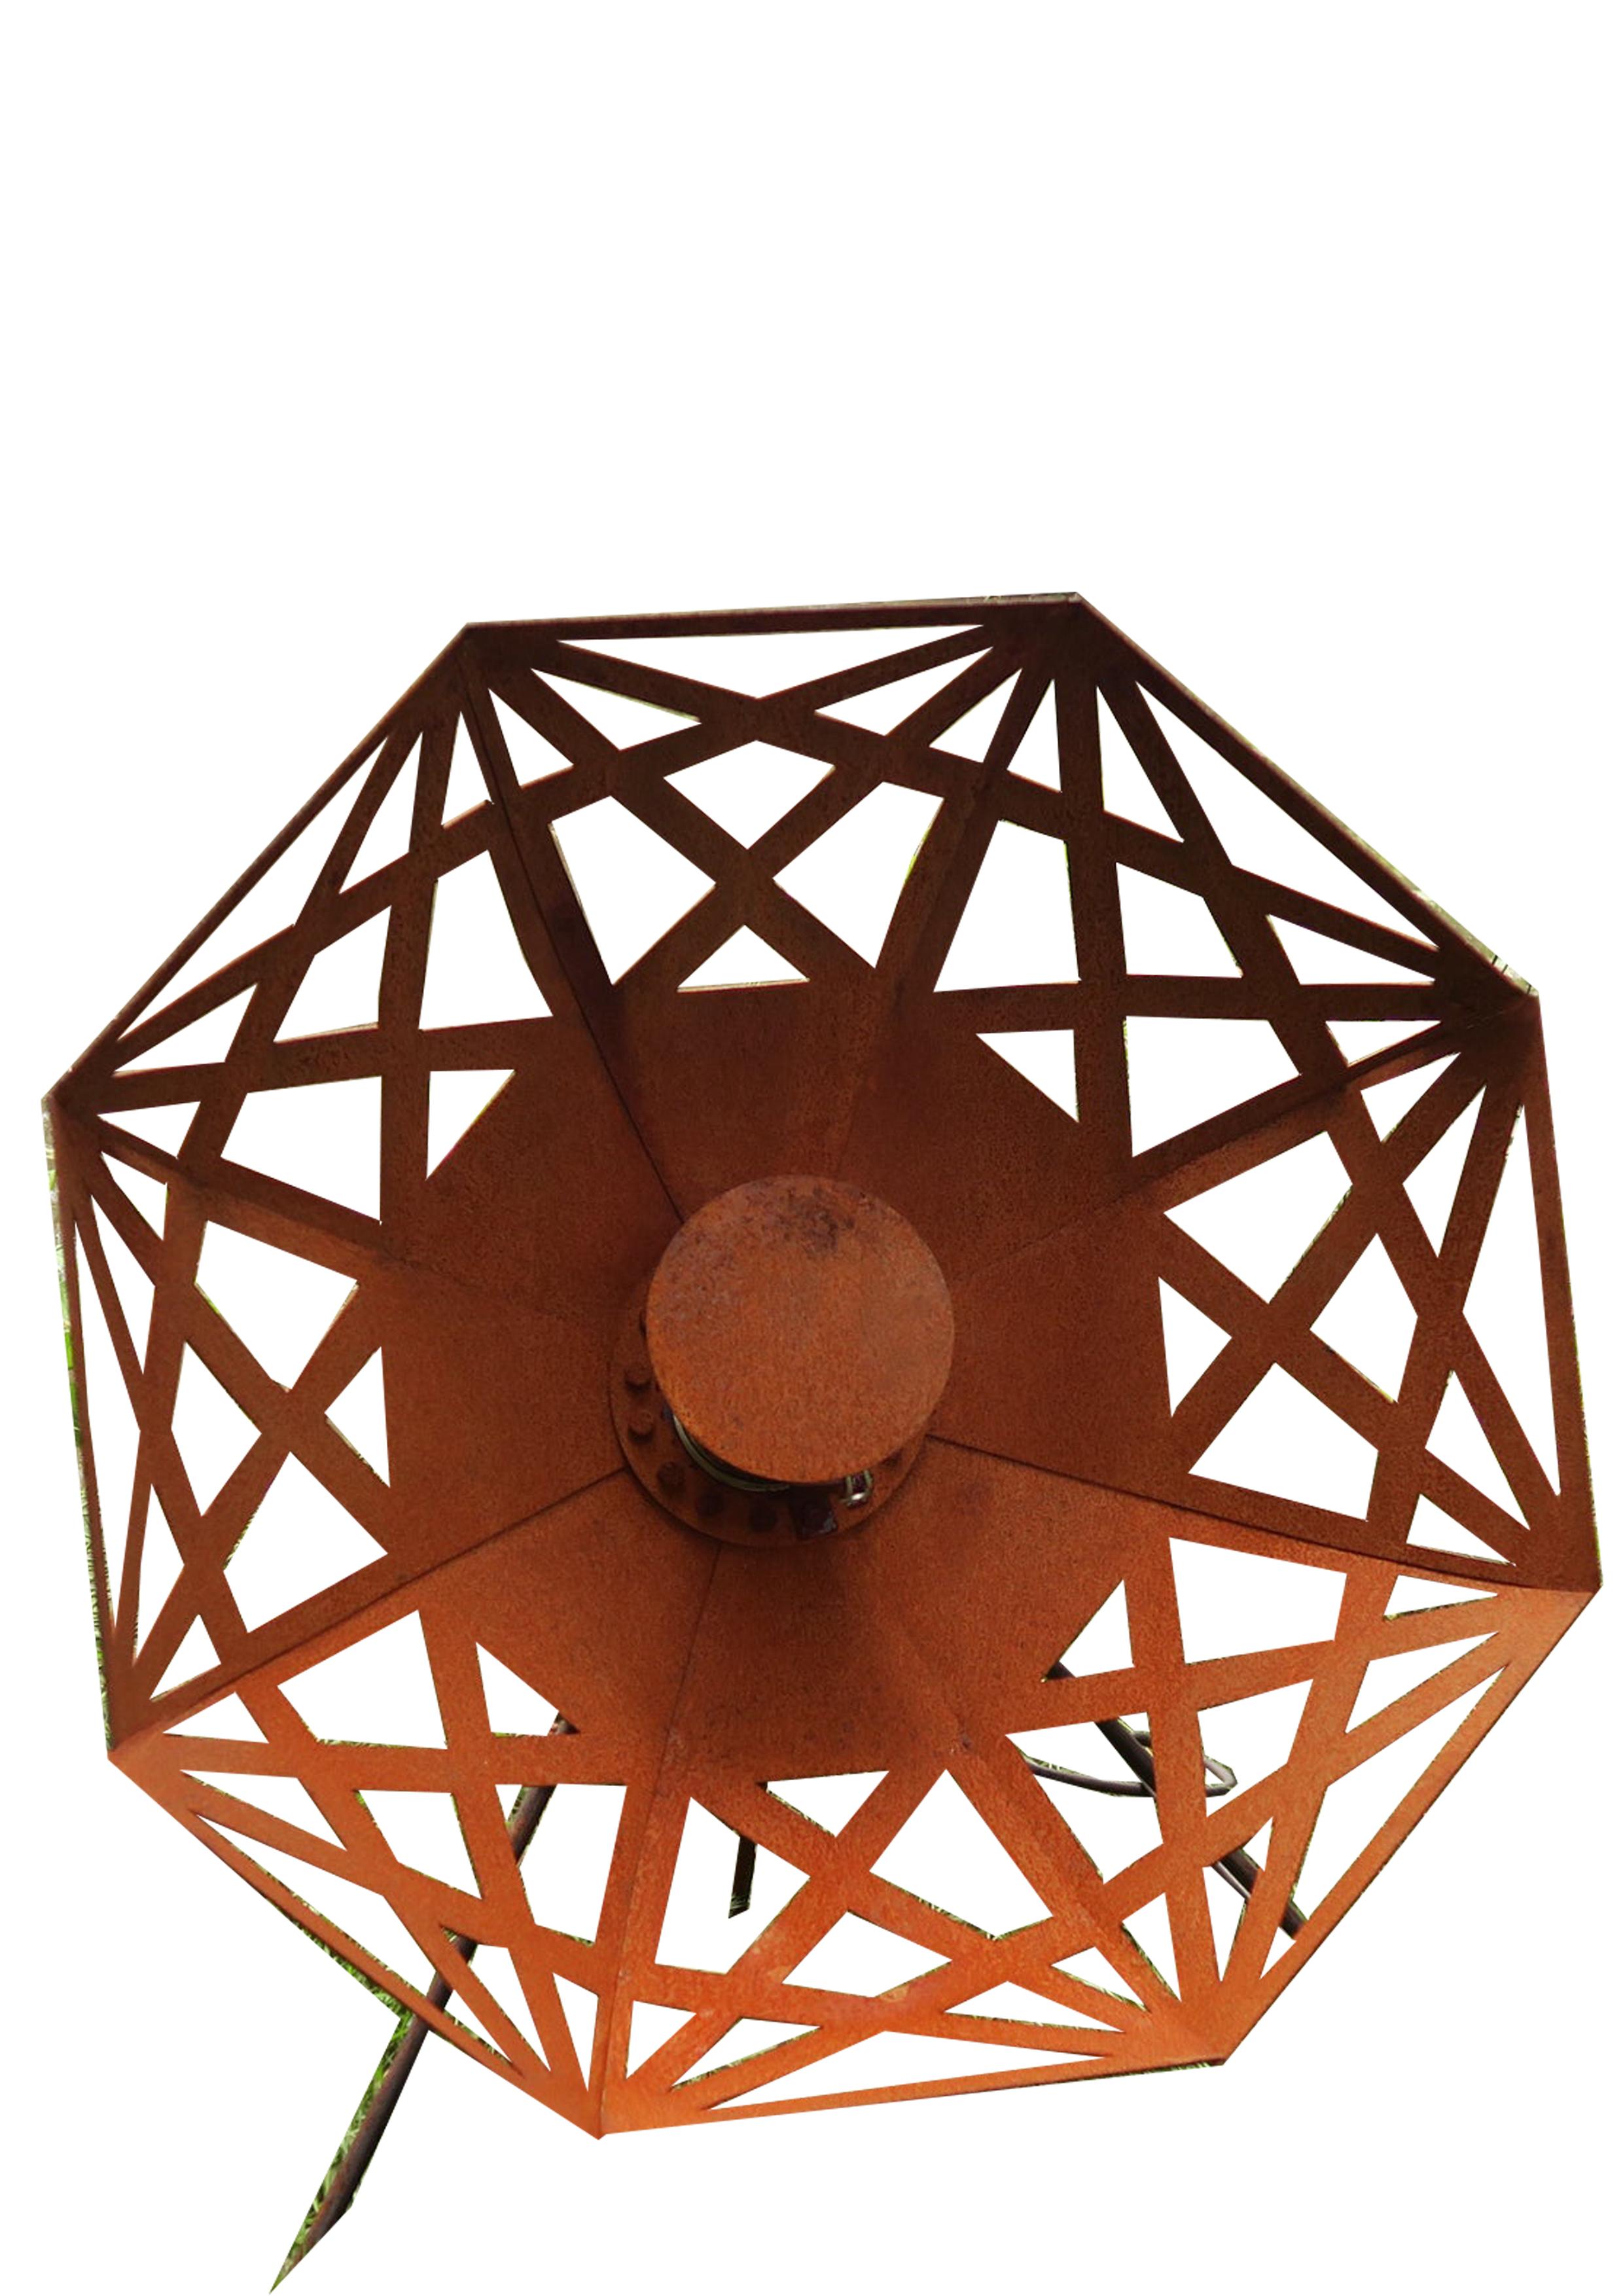 Outdoor Lamp - "Umbrella" (Beta) - Rusty - art garden decoration - 70cm - Mixed Media Art by Stefan Traloc